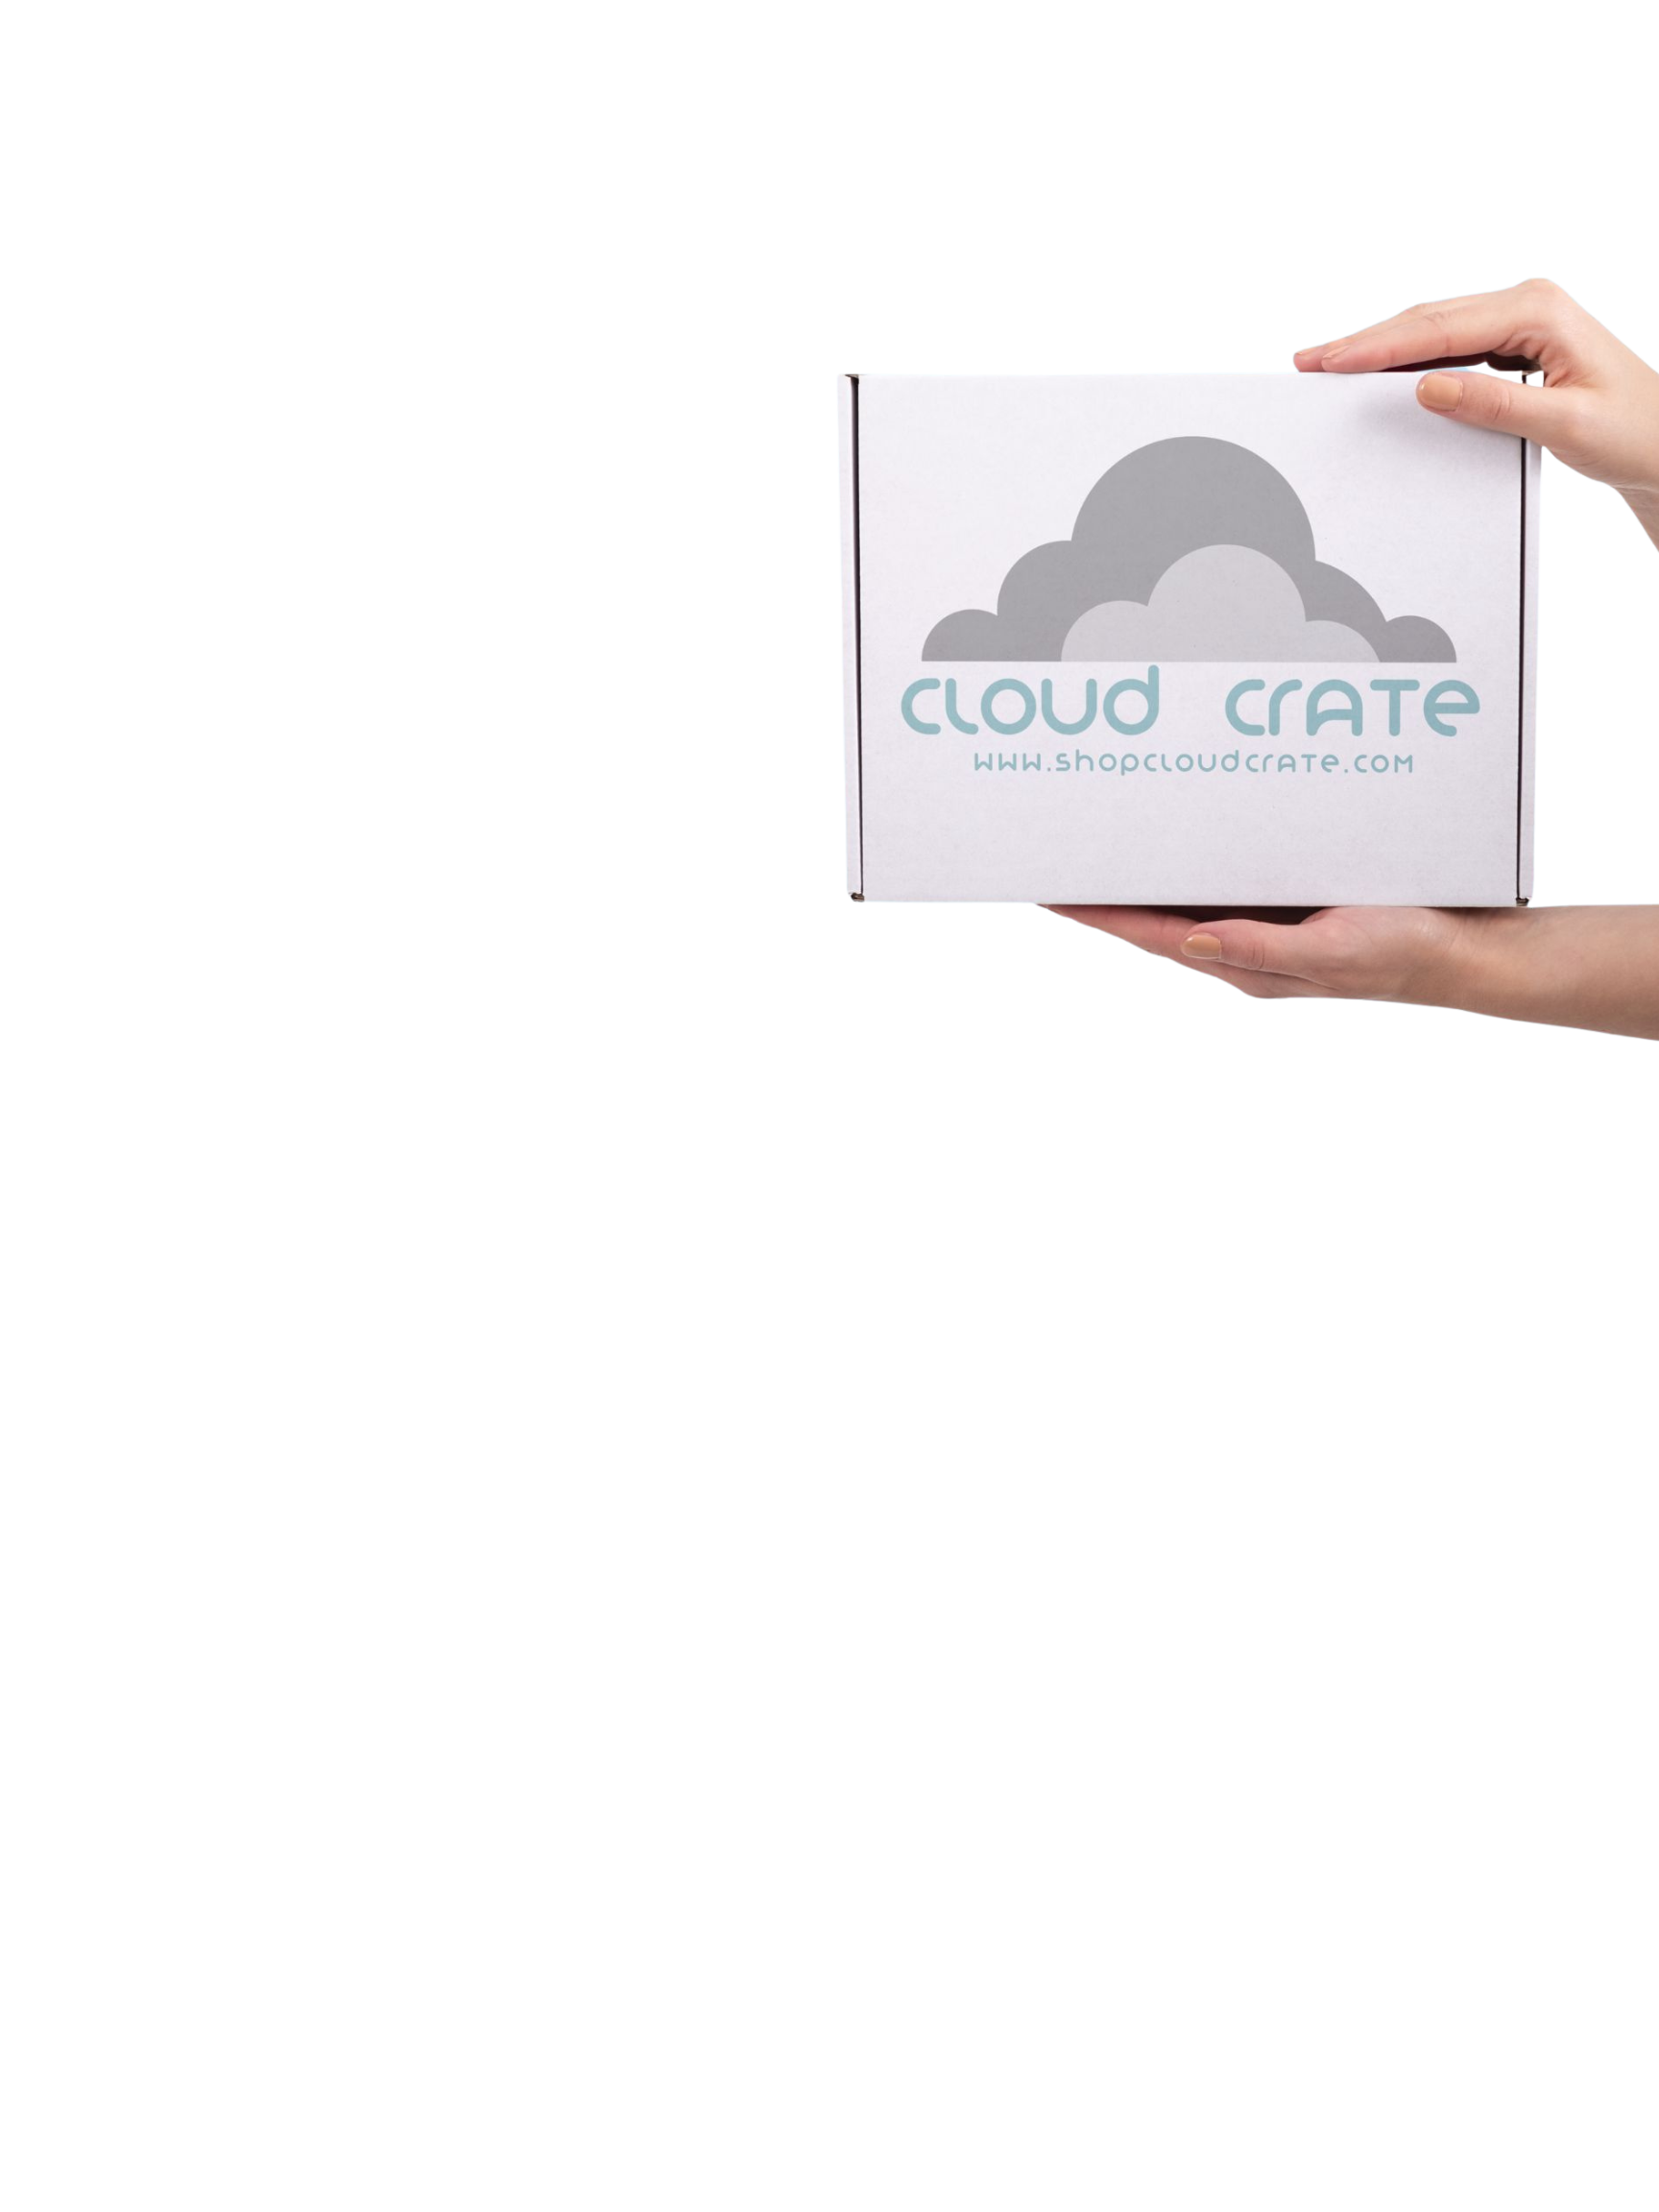 647-cloud-crate-logo-5-16998100880543.png